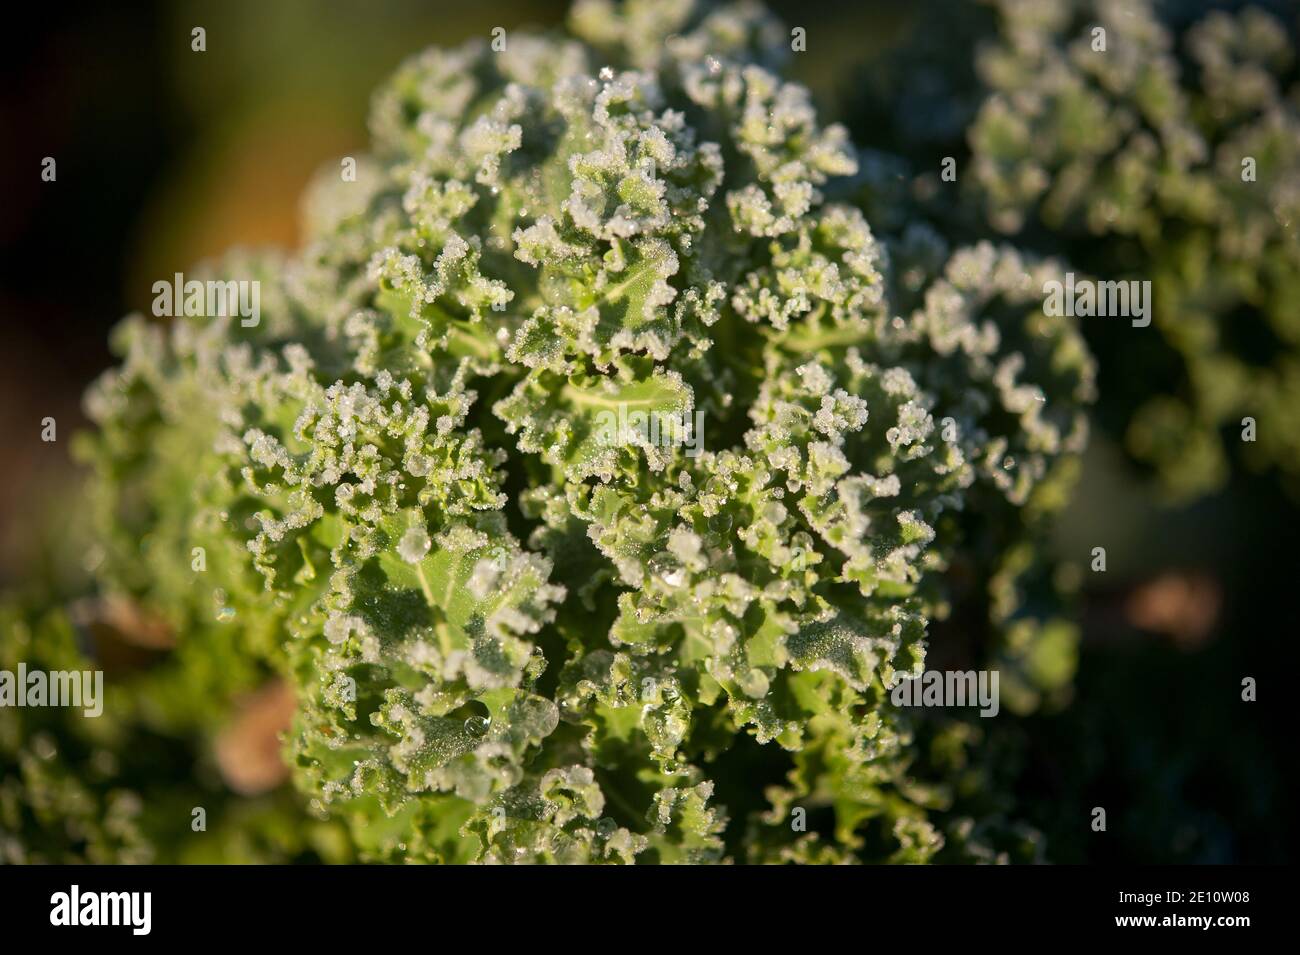 Curly Kale, Brassica oleracea, Kilbrannish South, Mount Leinster, County Wexford, Ireland, Europe Stock Photo